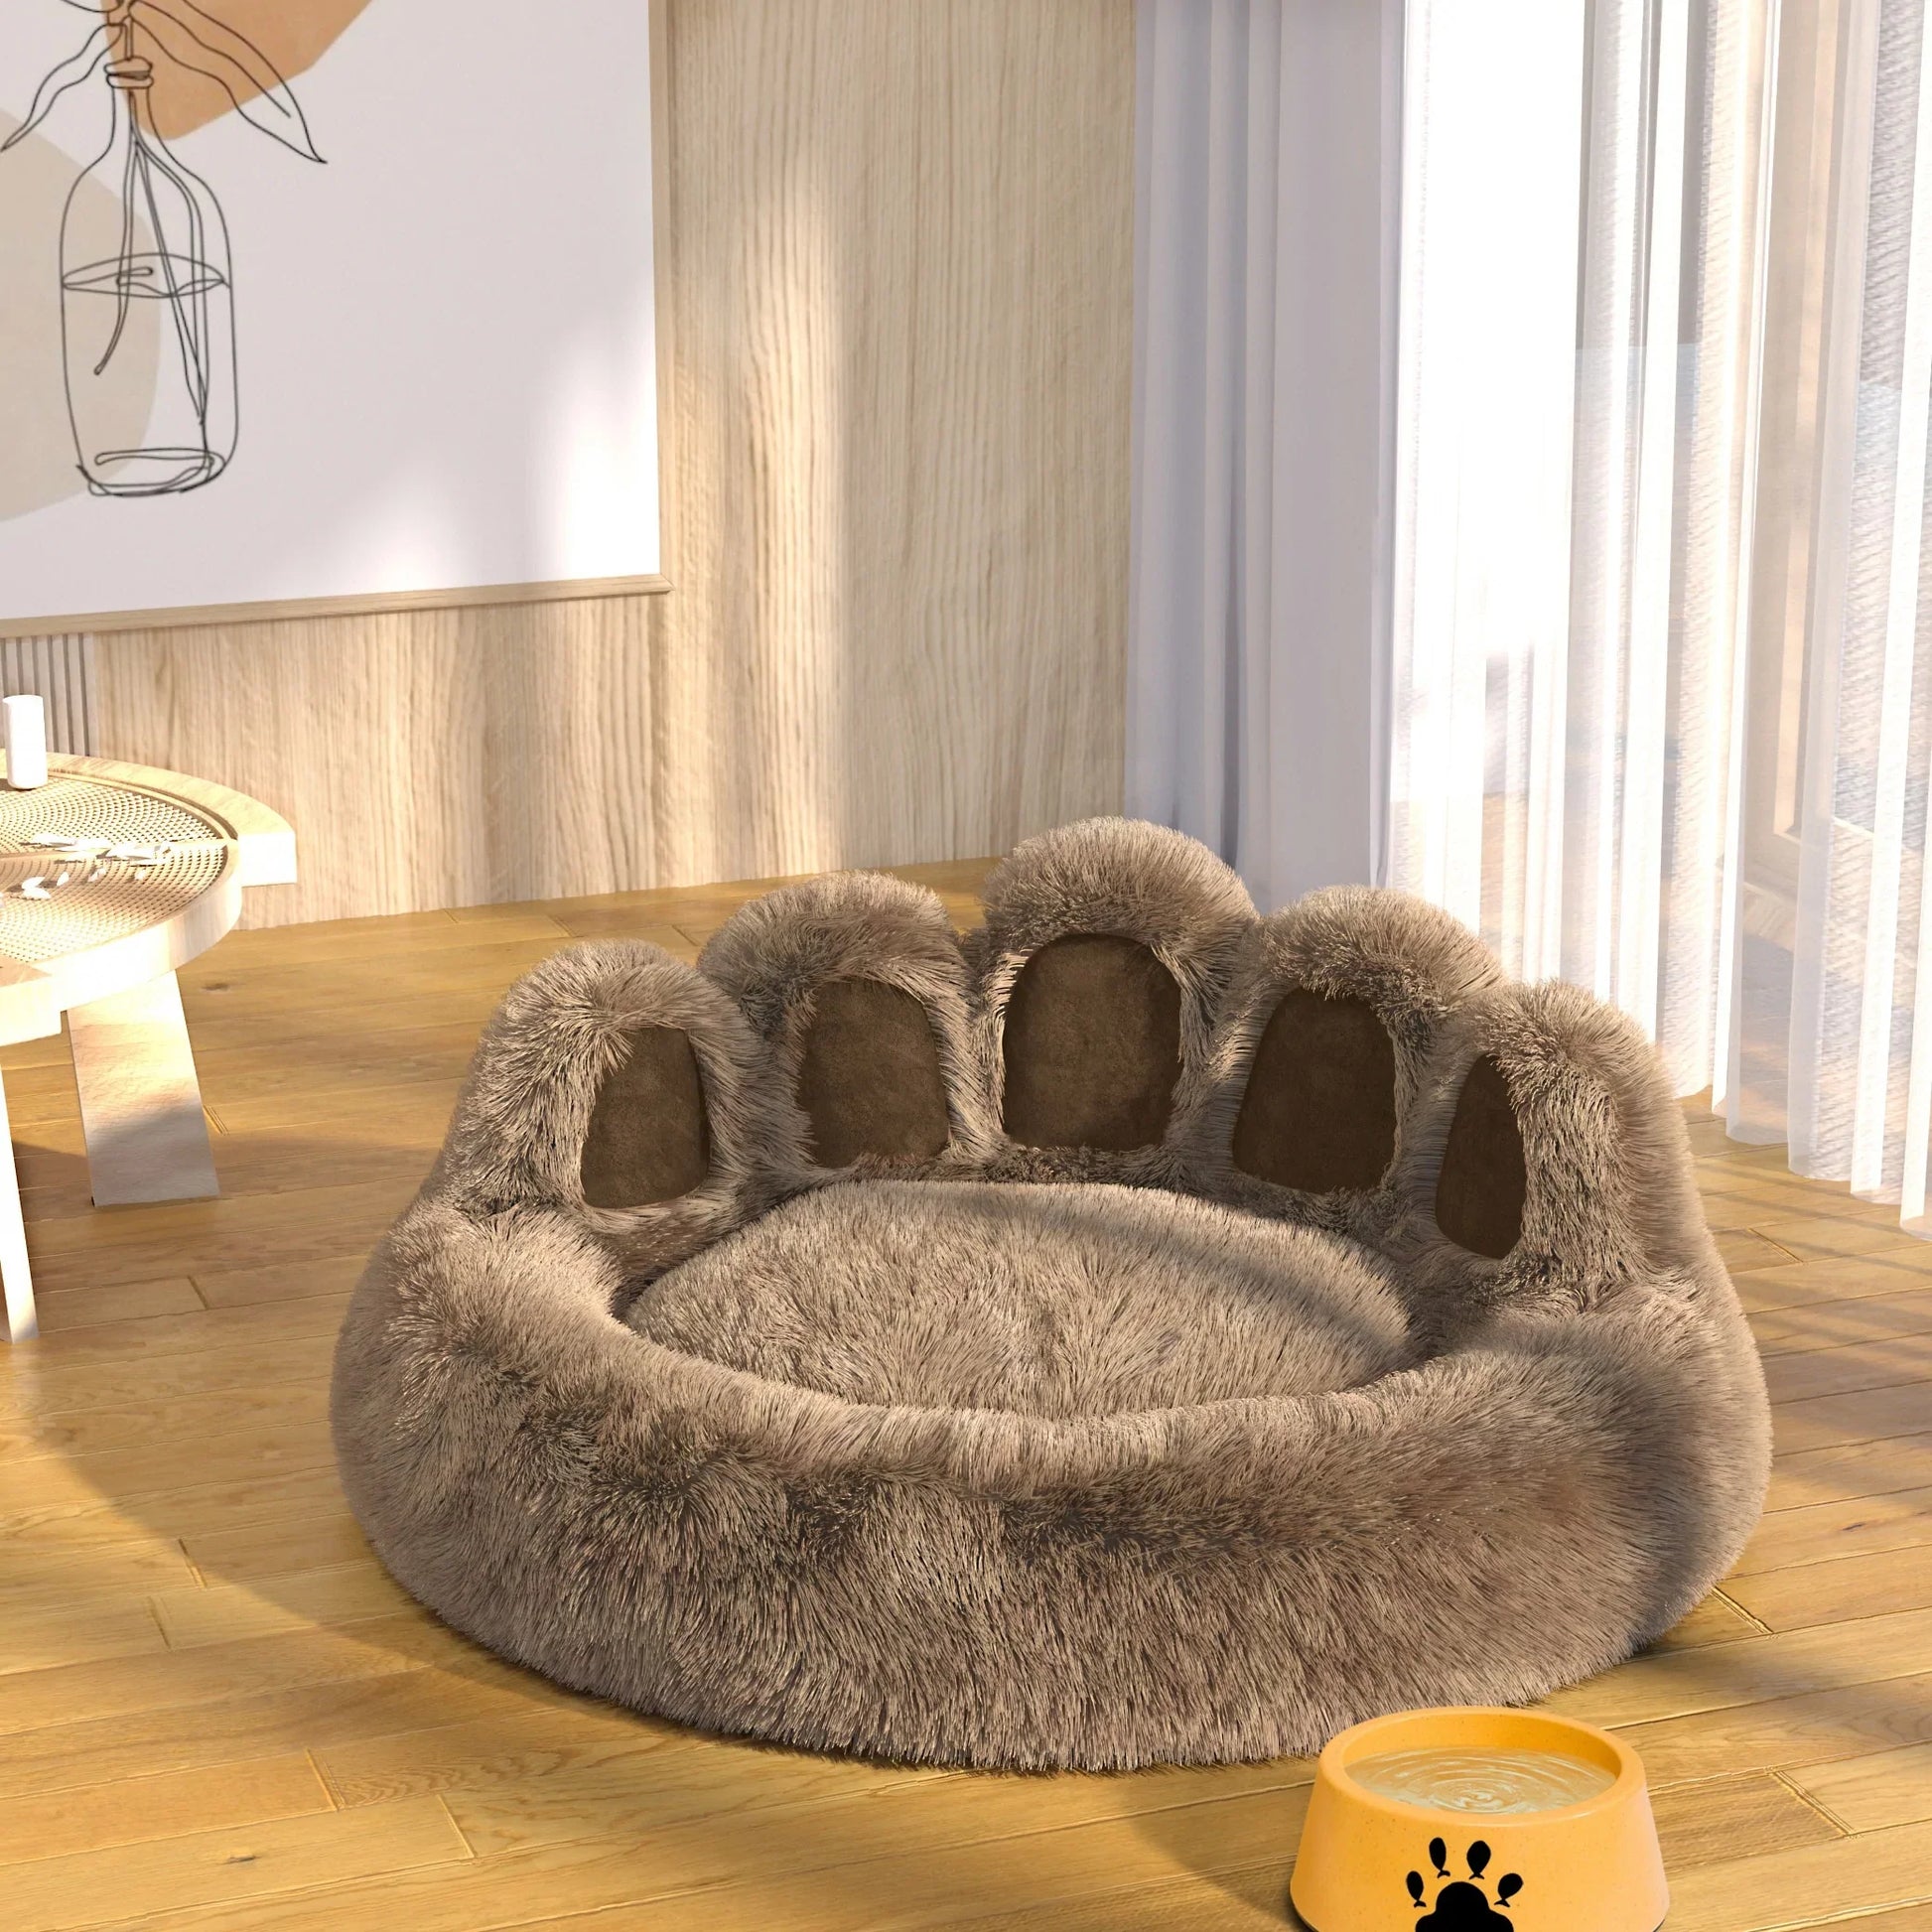 0 Fluffy Pets Paw Beds sold by Fleurlovin, Free Shipping Worldwide